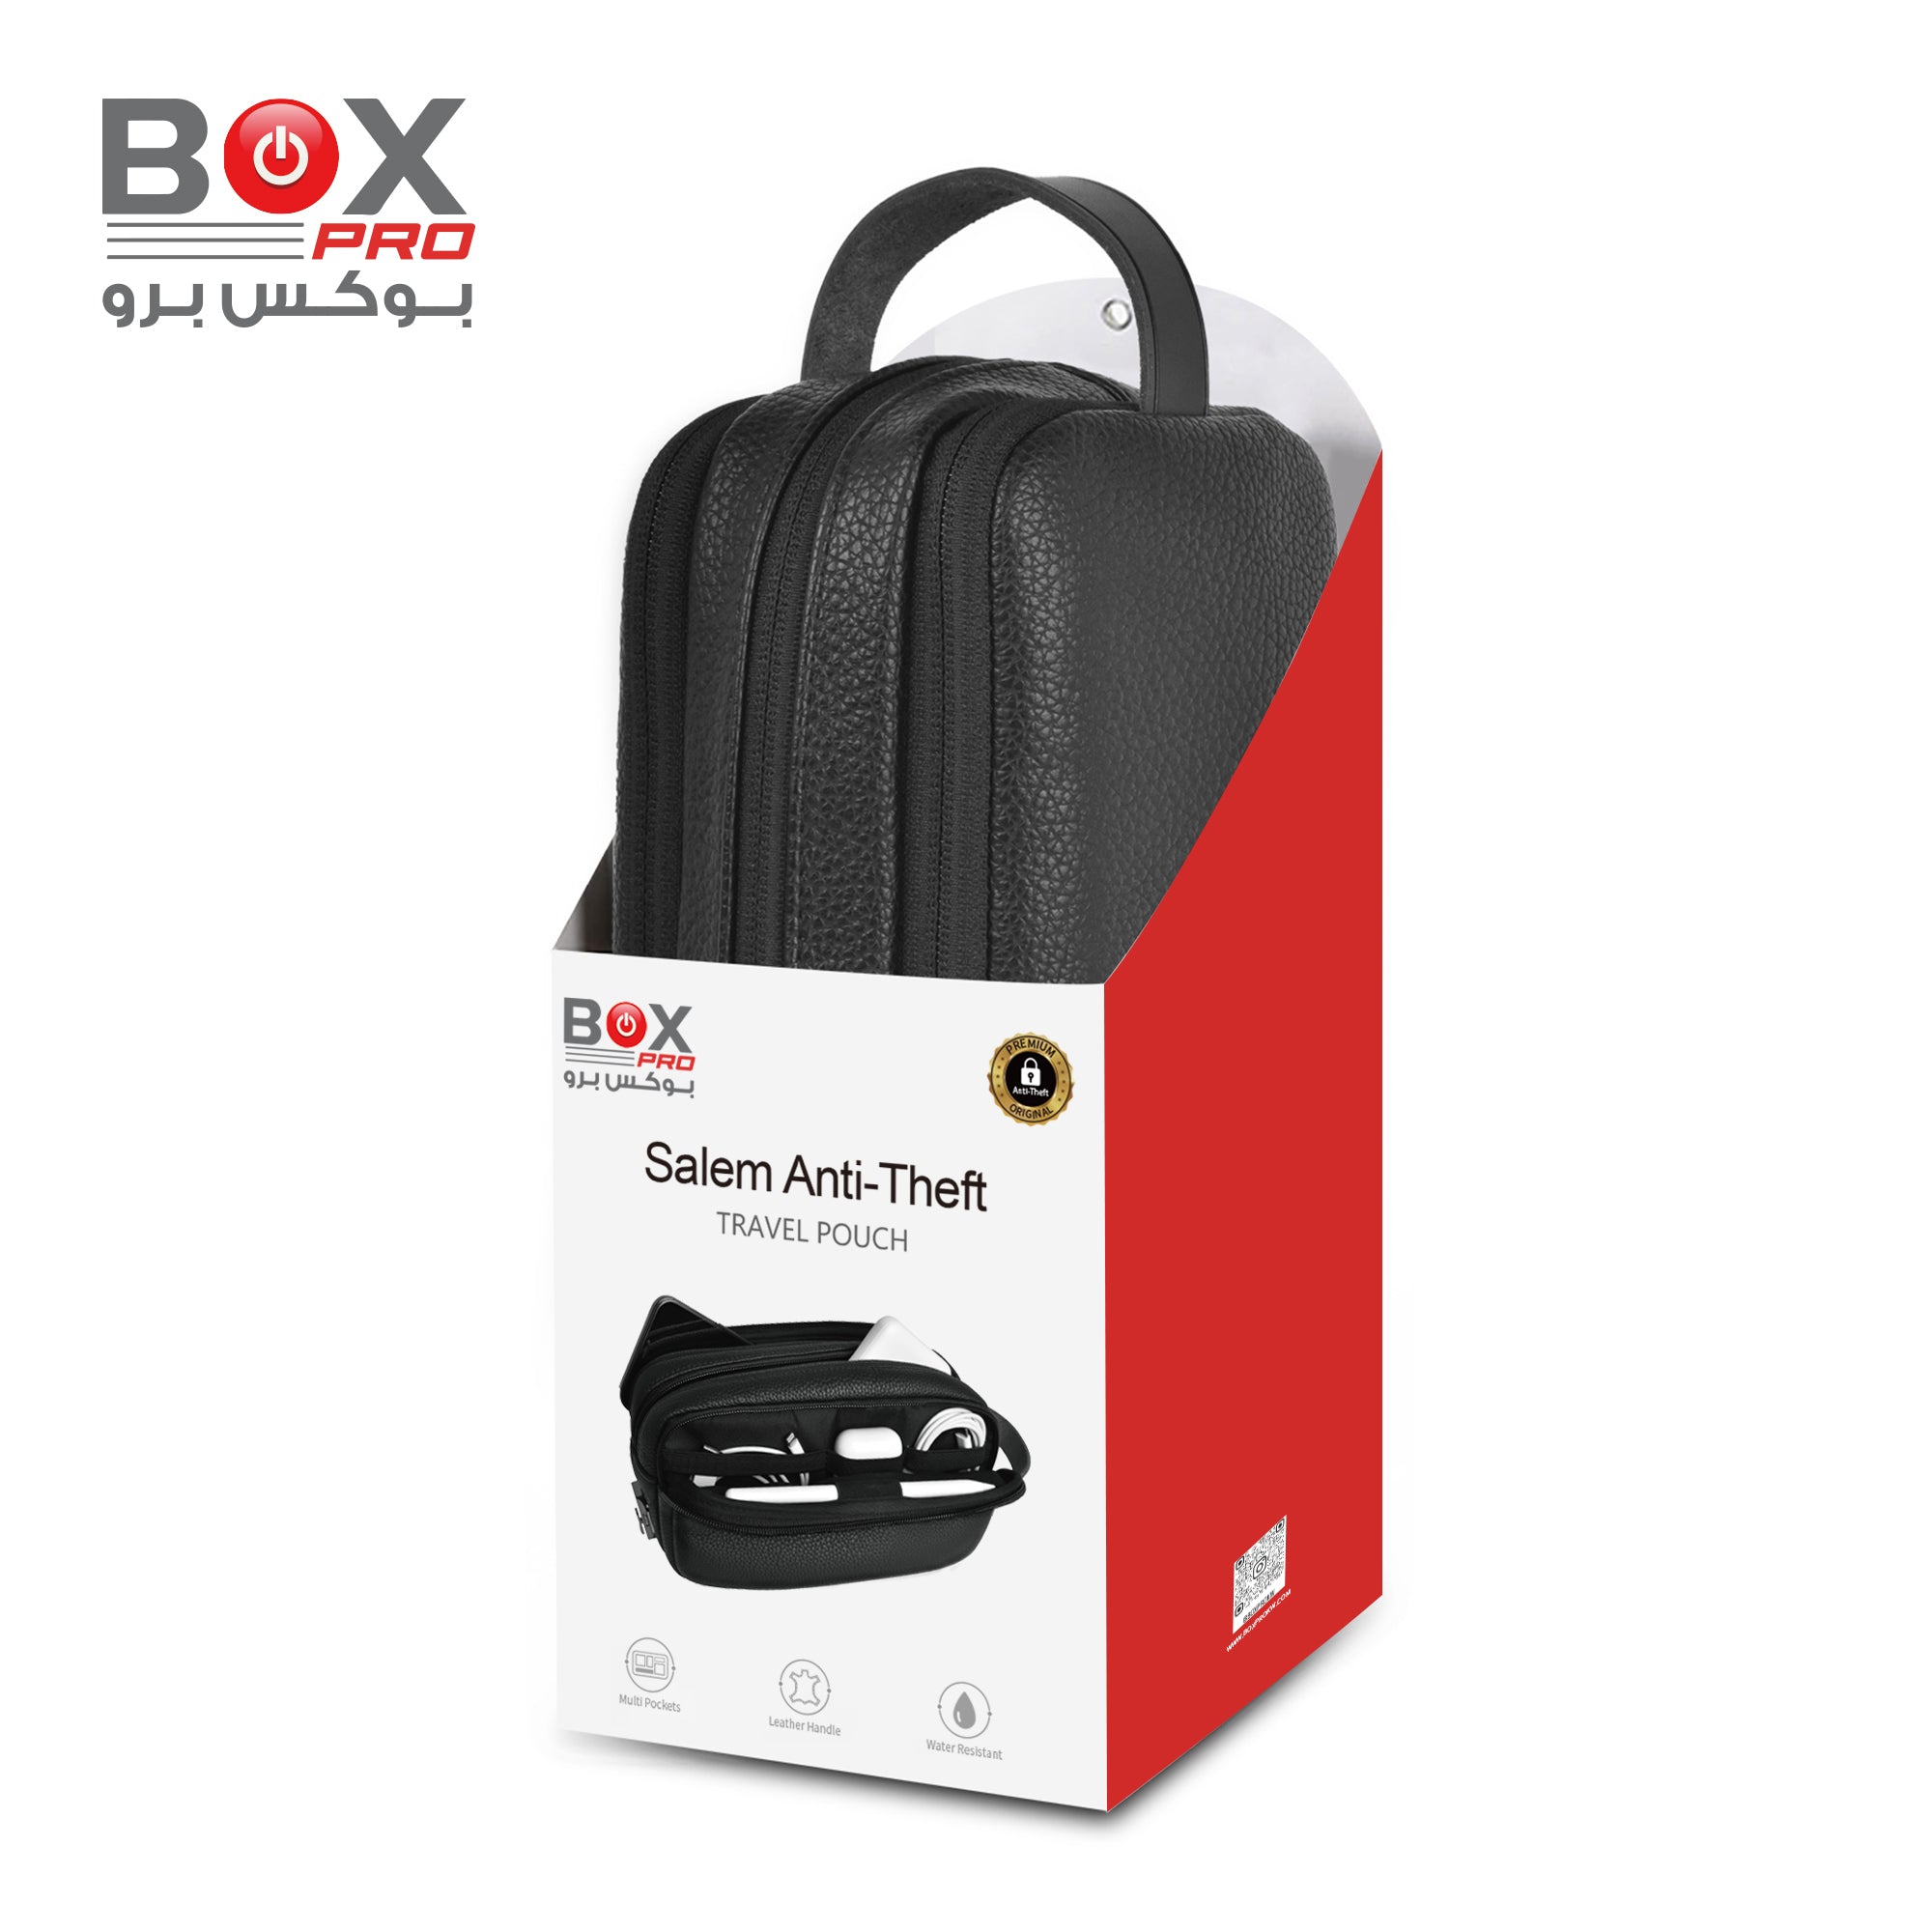 BoxPro Salem Anti-Theft Travel Pouch - Black